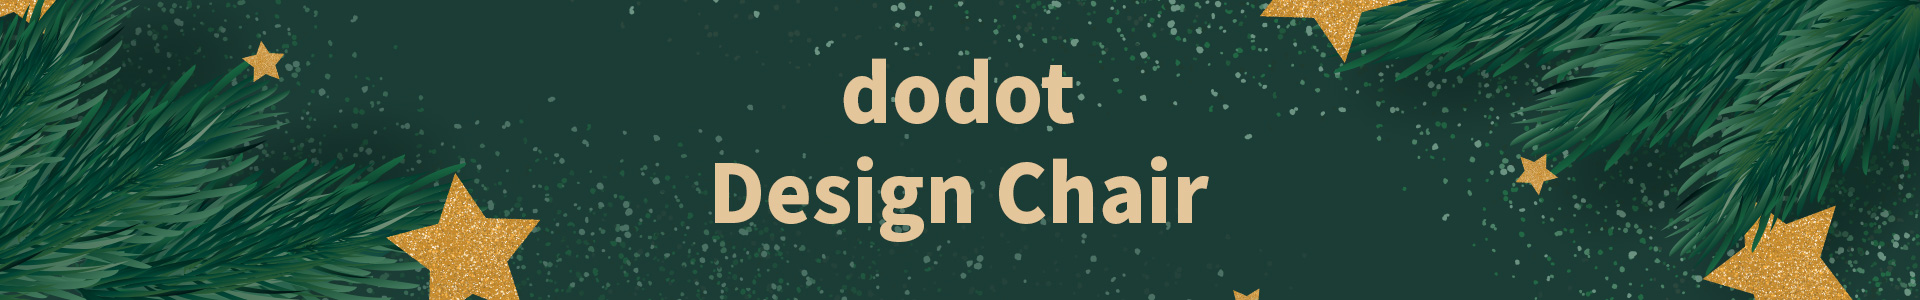 dodot design chair